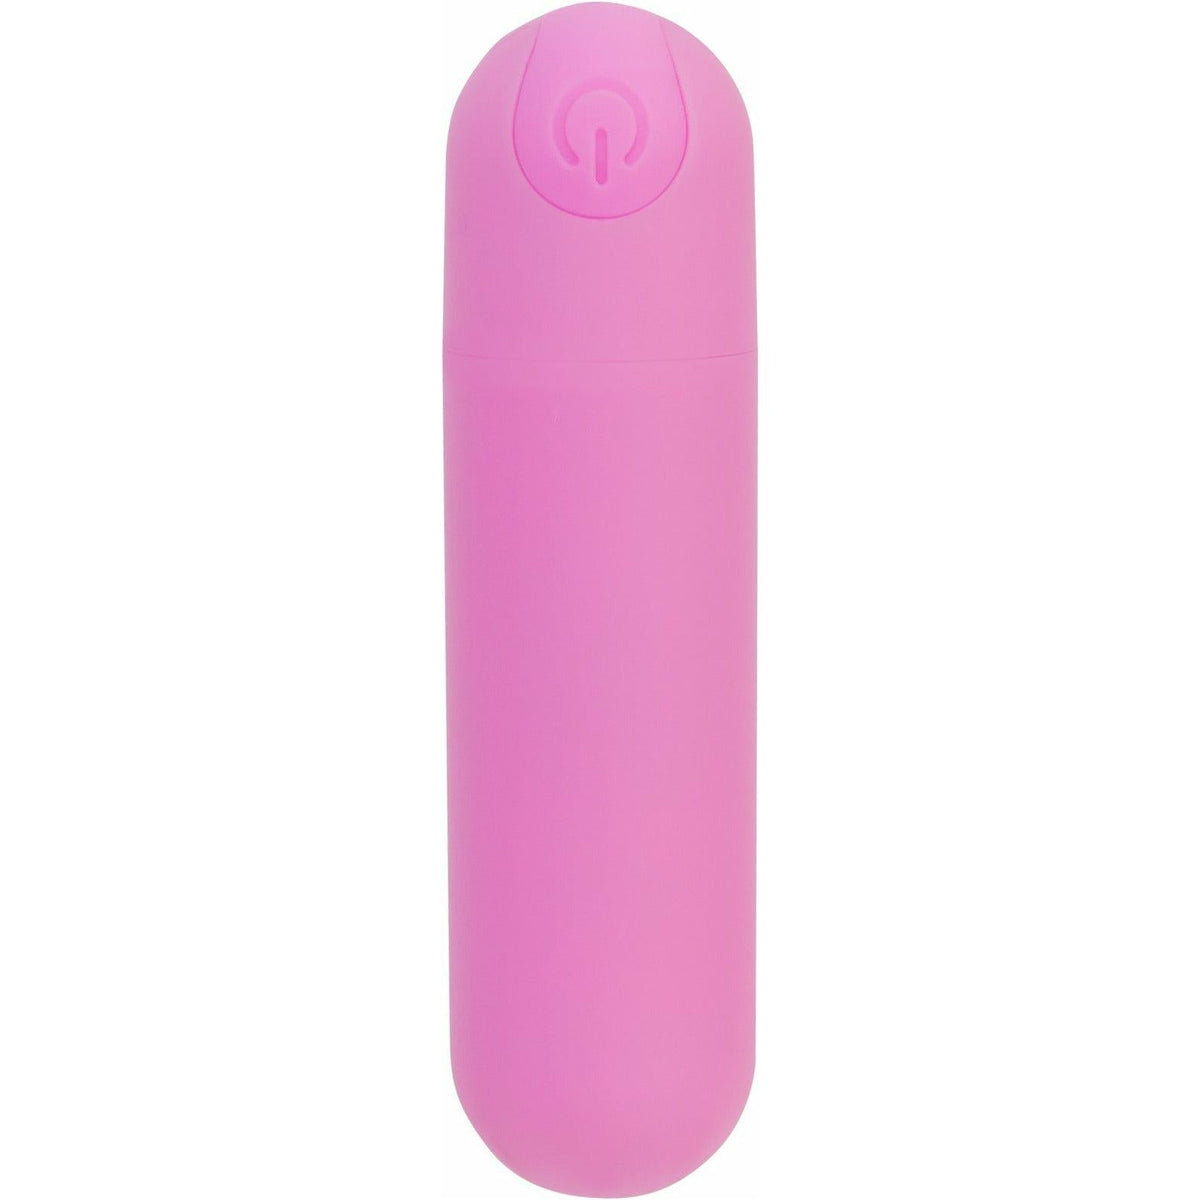 PowerBullet Essential Vibrating Bullet - Pink